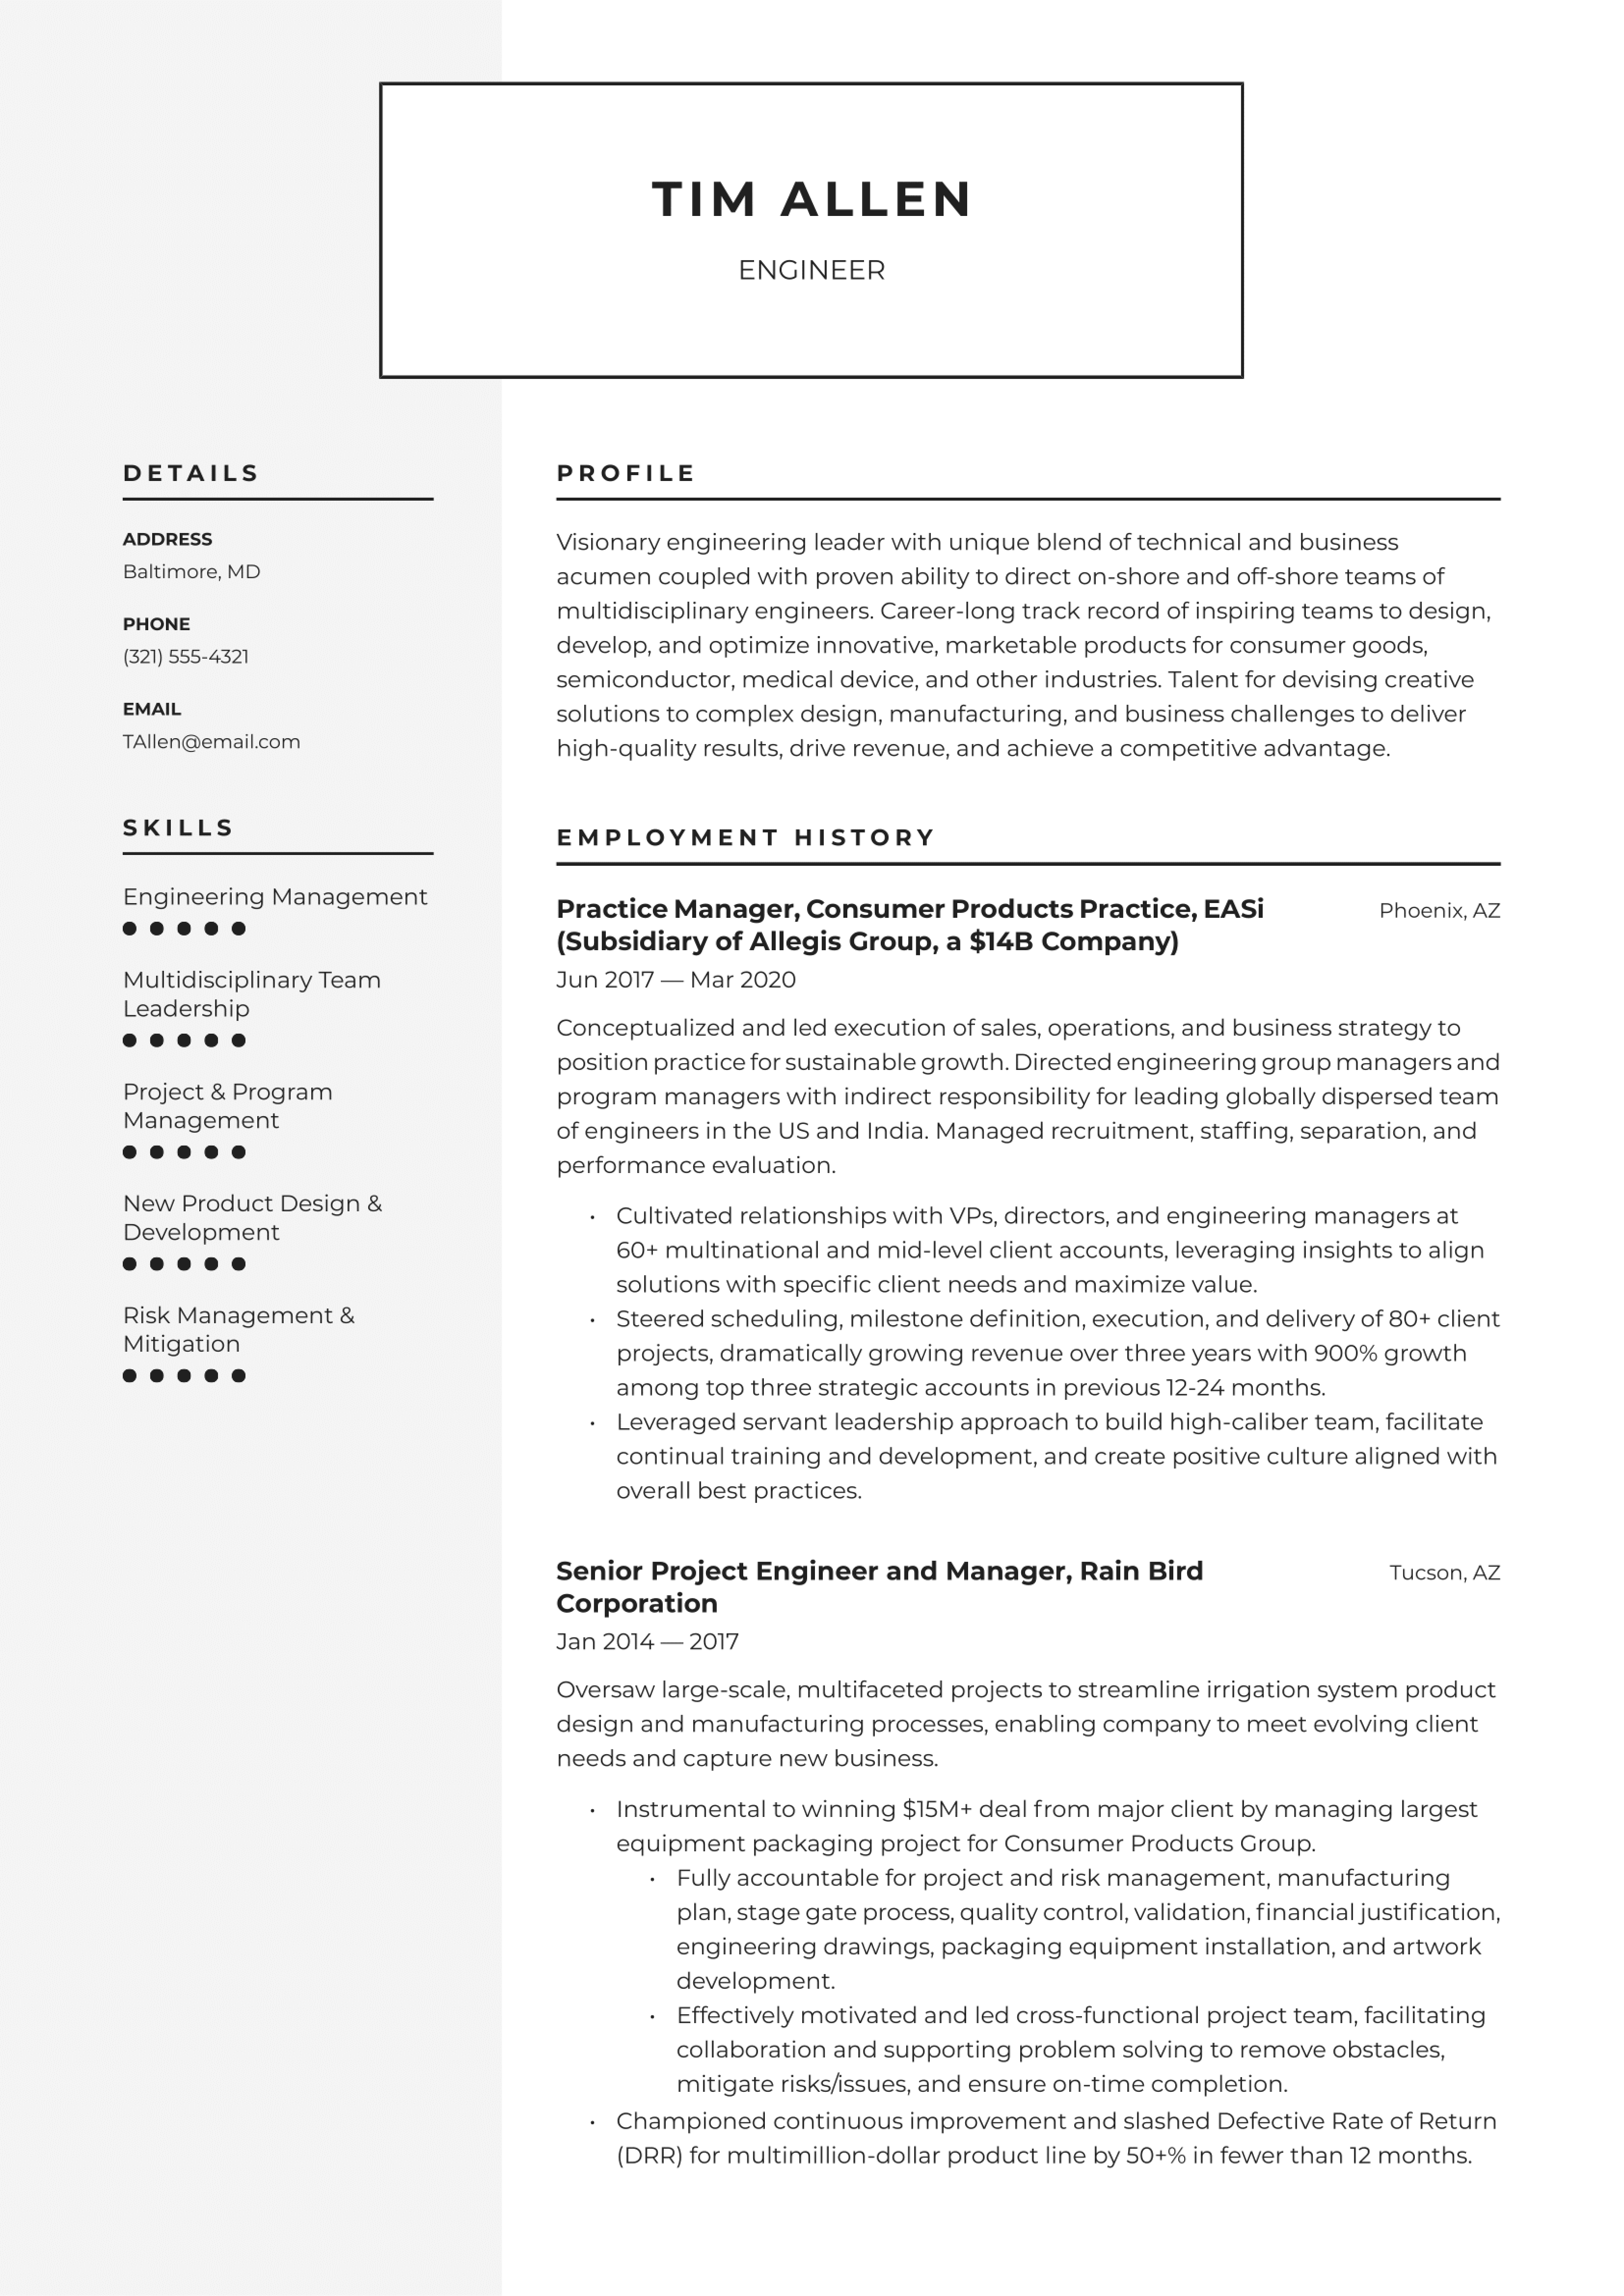 engineer-resume-example.png